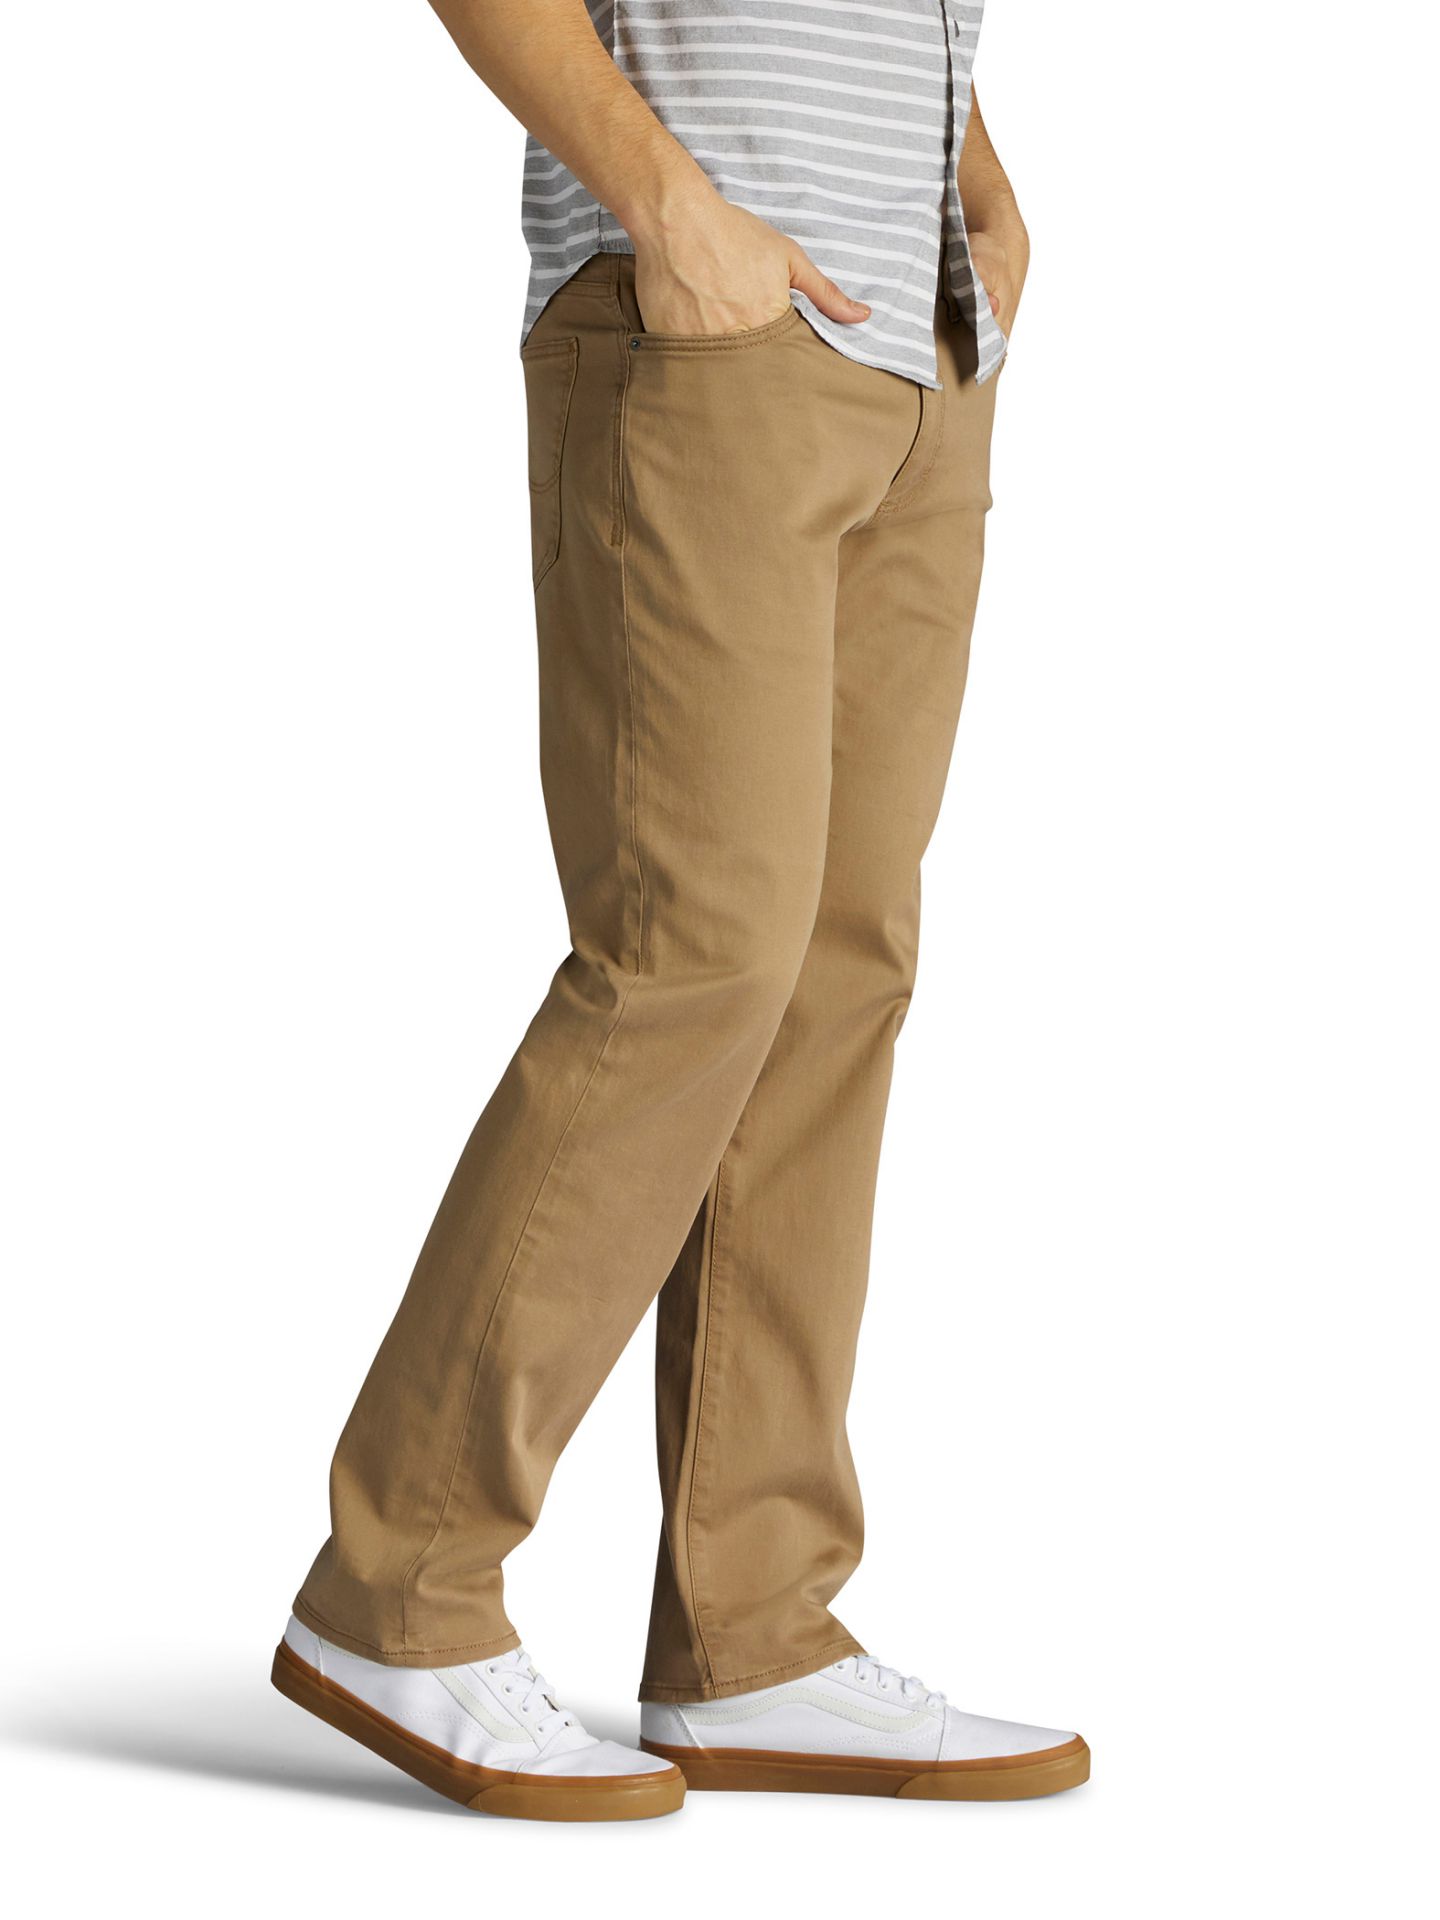 Midrise Cougar Extreme Motion Khaki Pocket Pants online 30x32 sale eBay for 5 | Lee Stretch Straight